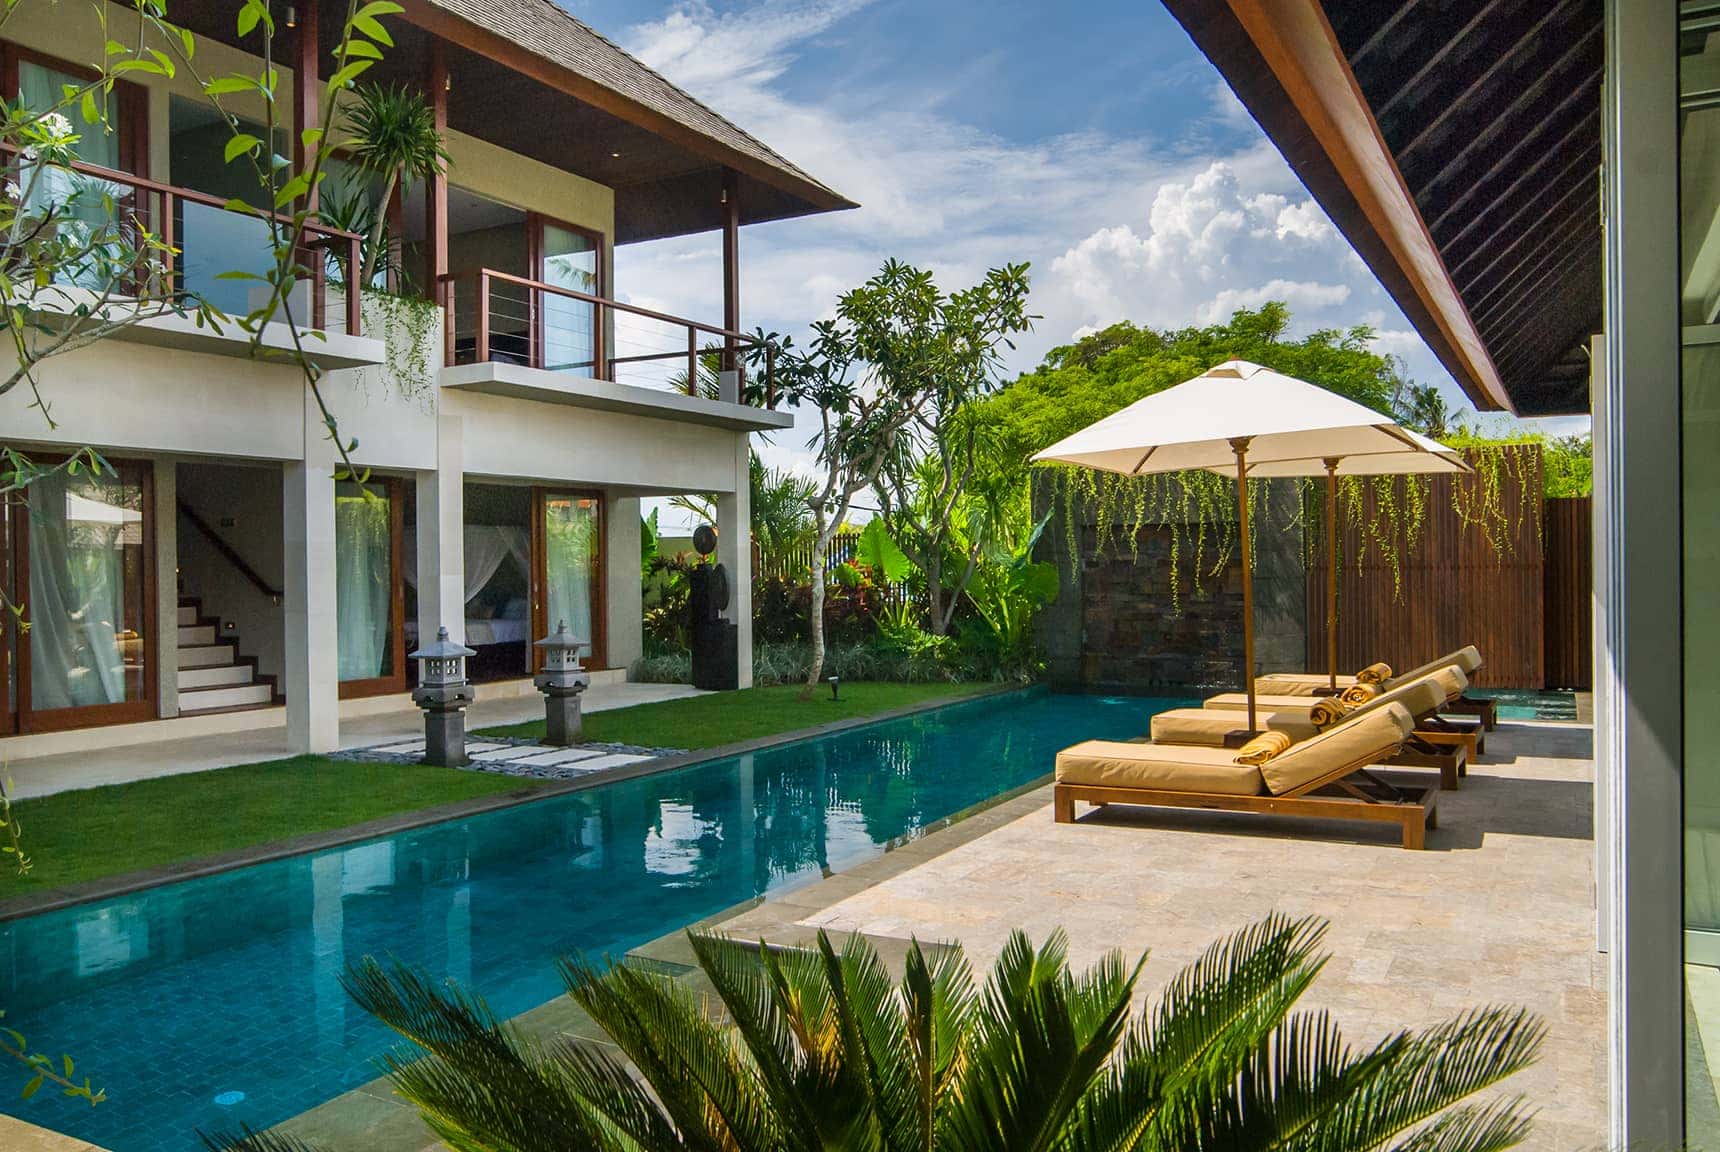 Villa Batu Belig - Seminyak, Bali Indonesia (Bali villa photography by master photographer Rick Carmichael of LuxViz)